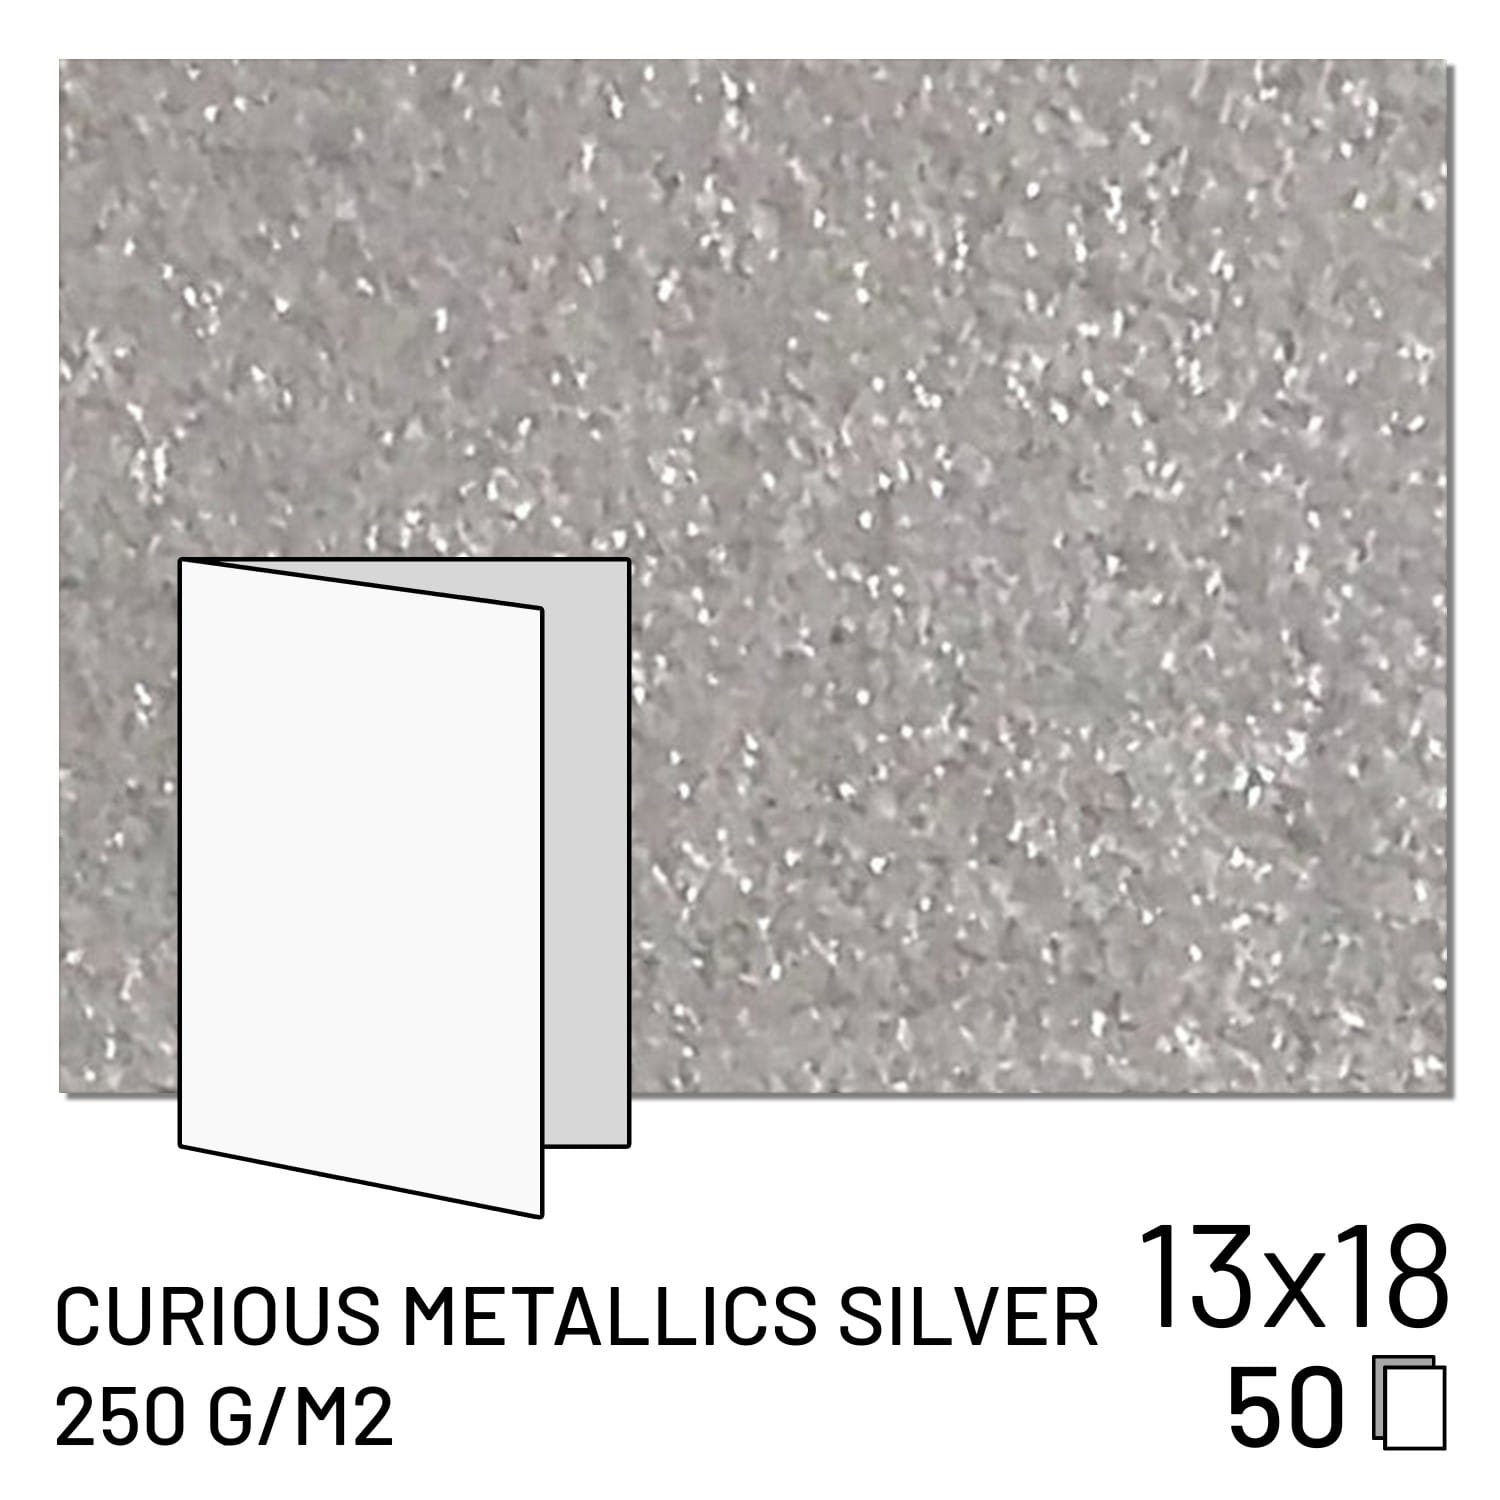 Papier FUJI Curious Metallics Silver - Blanc - 250g 13x18 / 2 volets (50 feuilles) (70100148096)